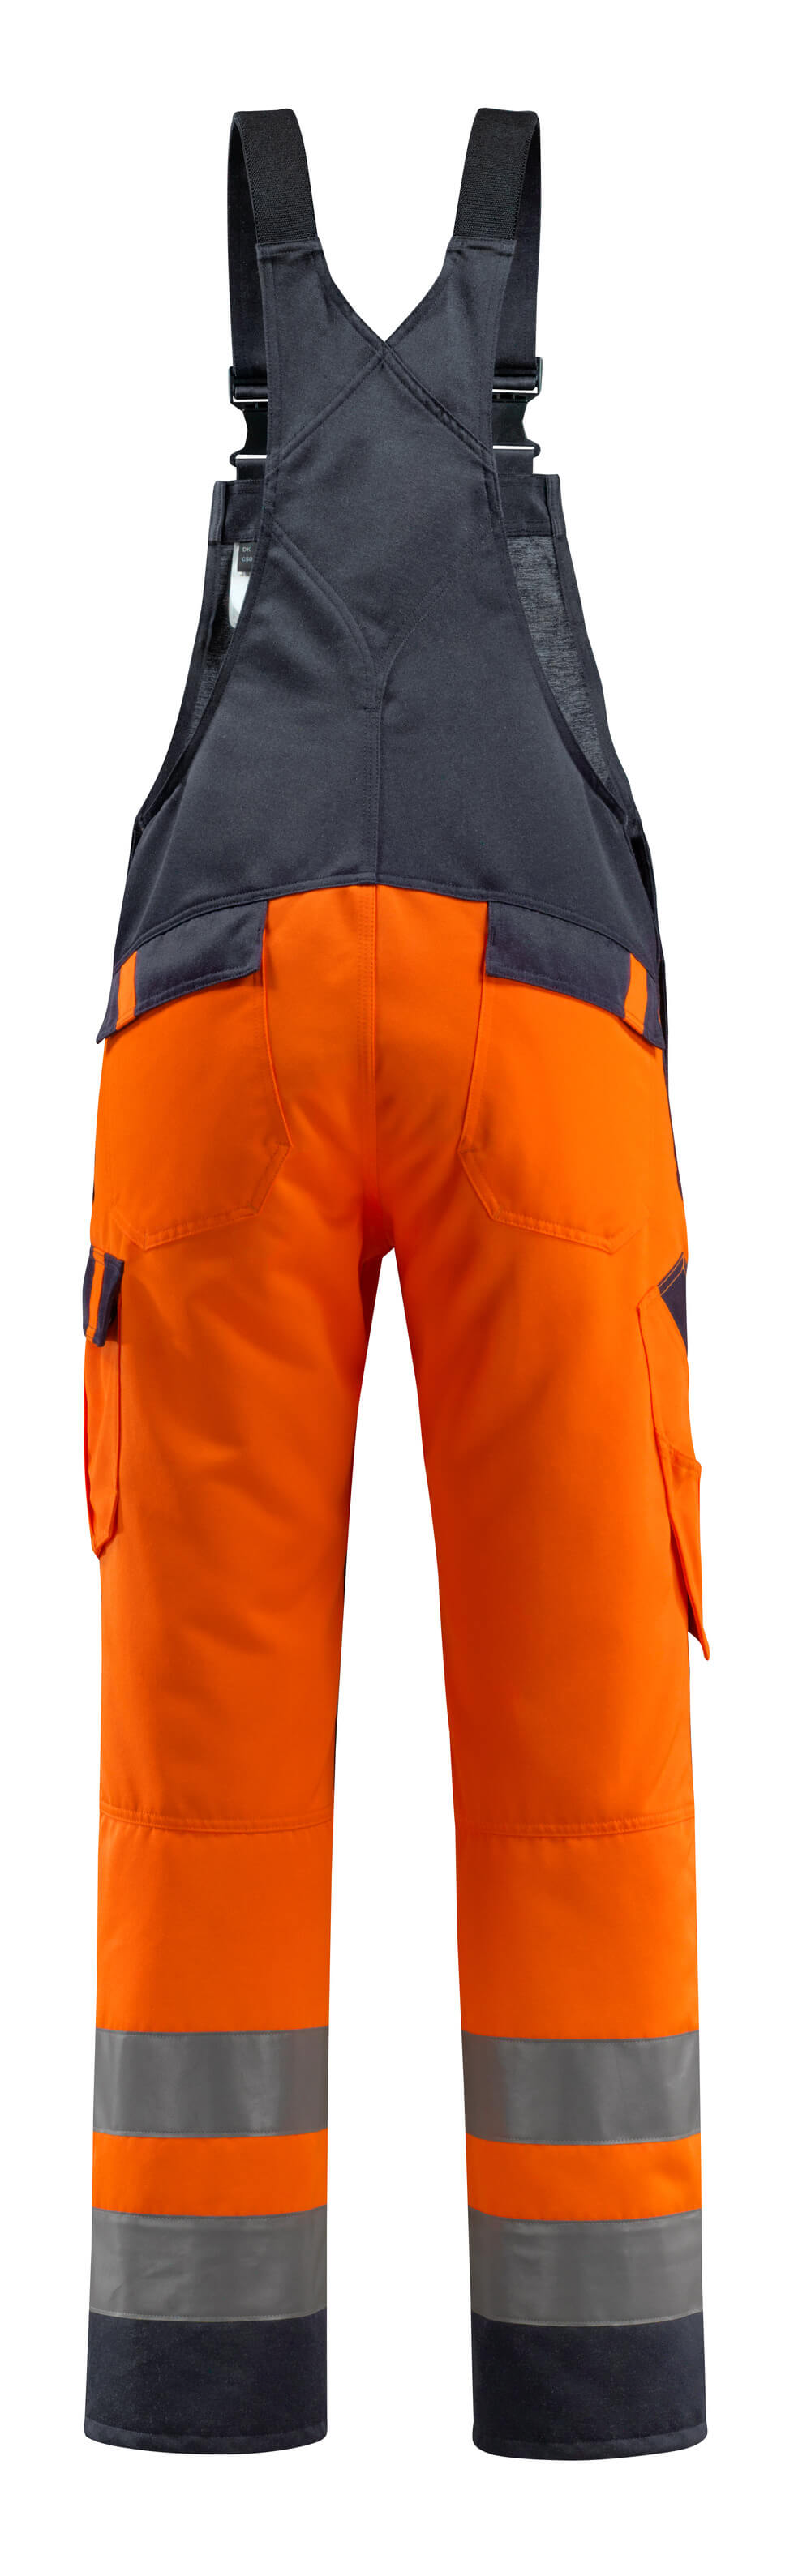 Mascot SAFE LIGHT  Gosford Bib & Brace with kneepad pockets 15969 hi-vis orange/dark navy